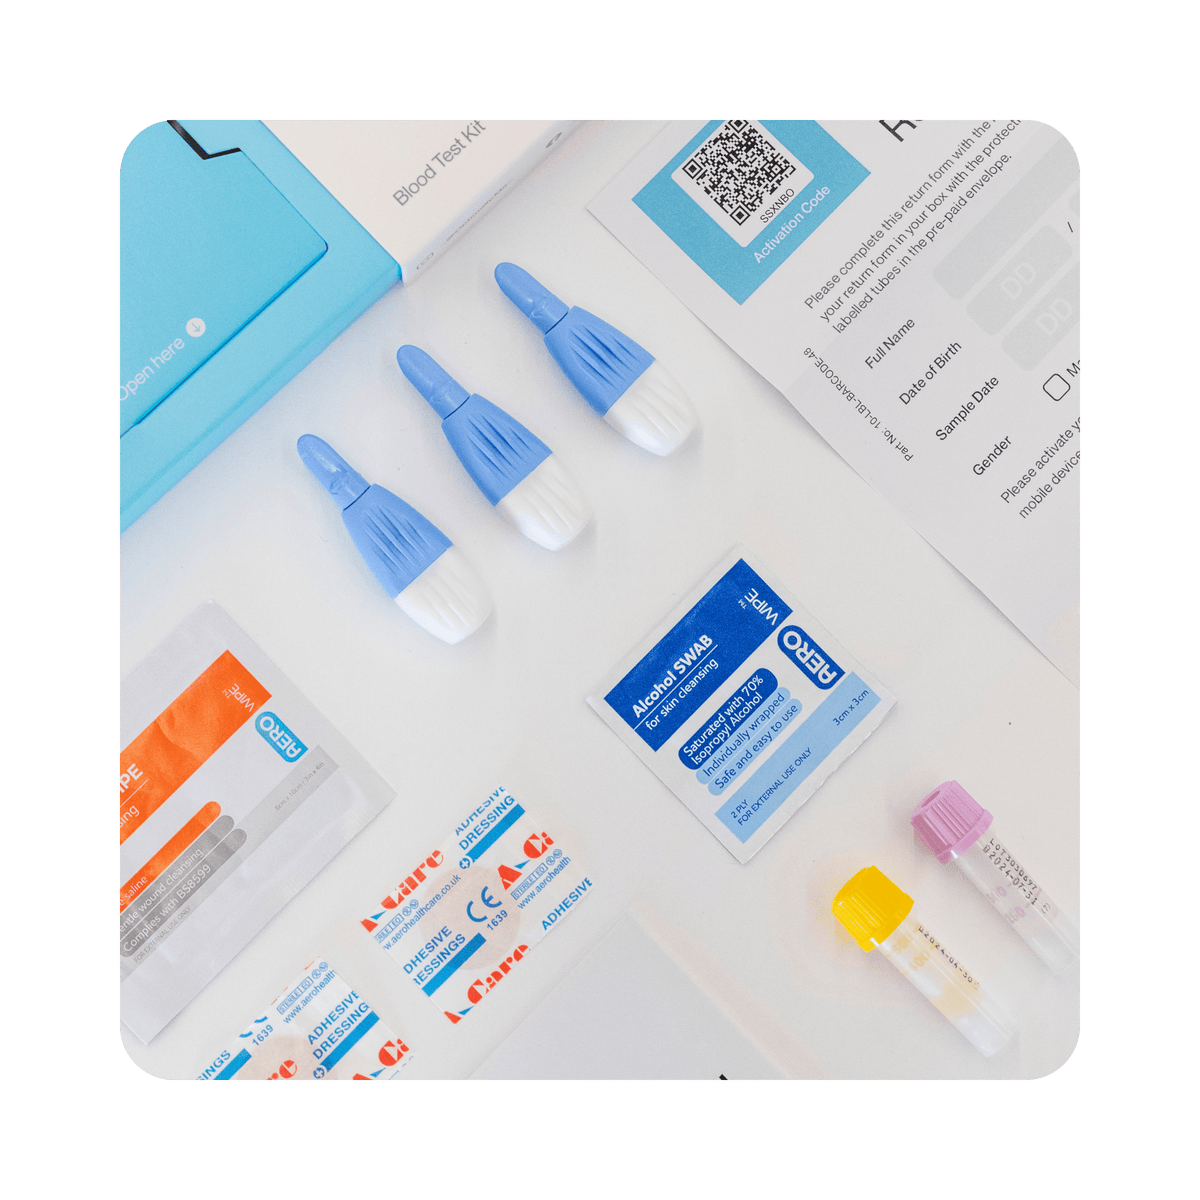 Male Hormone Test &amp; Health Platform Test Kit OptimallyMe 